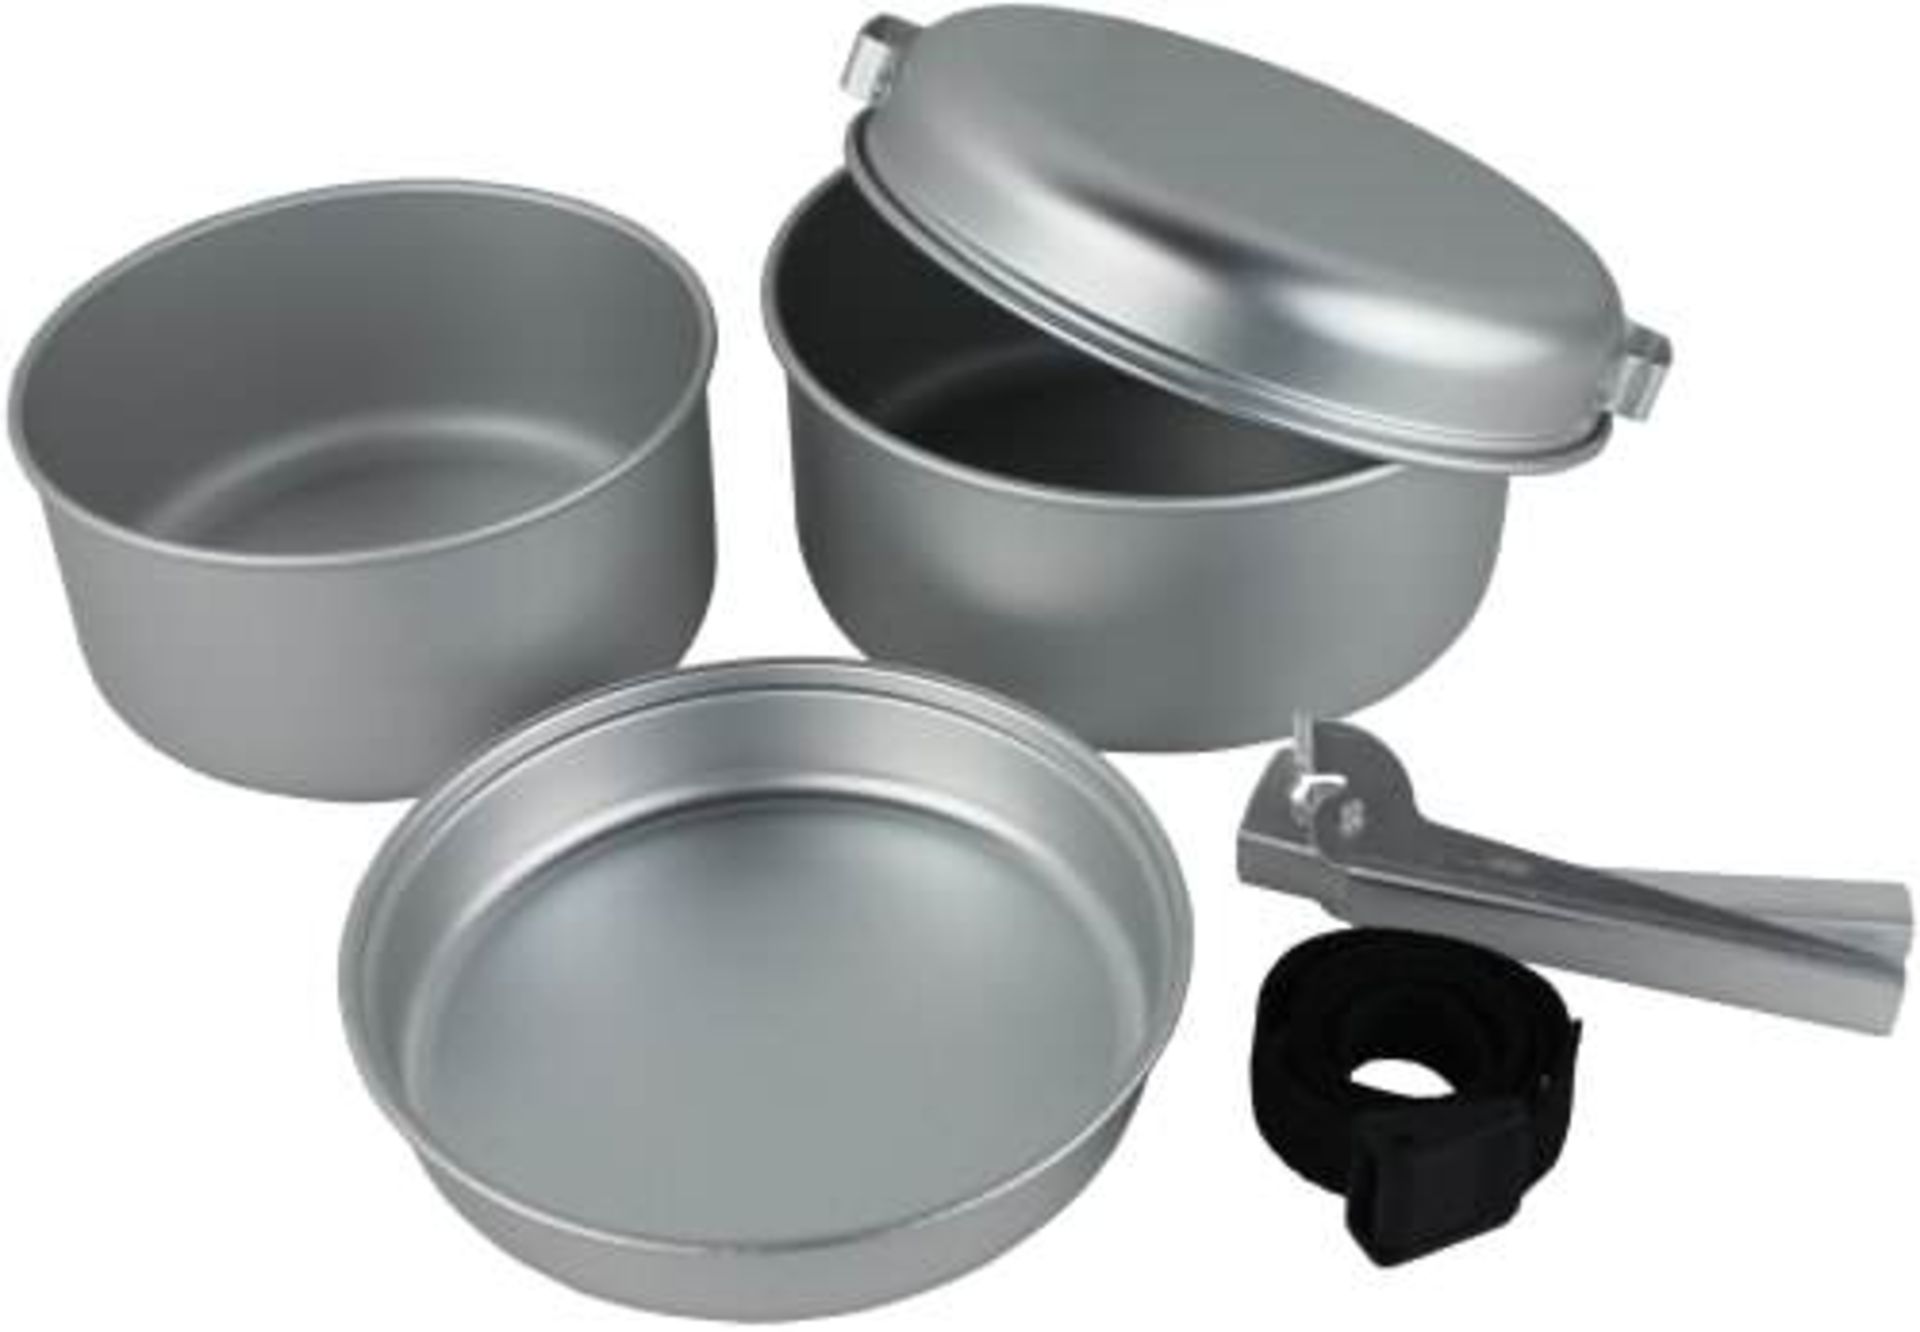 V *TRADE QTY* Brand New 5Pce Aluminium Cook Set Inc 2 Saucepans 1 Frying Pan Etc X 7 YOUR BID